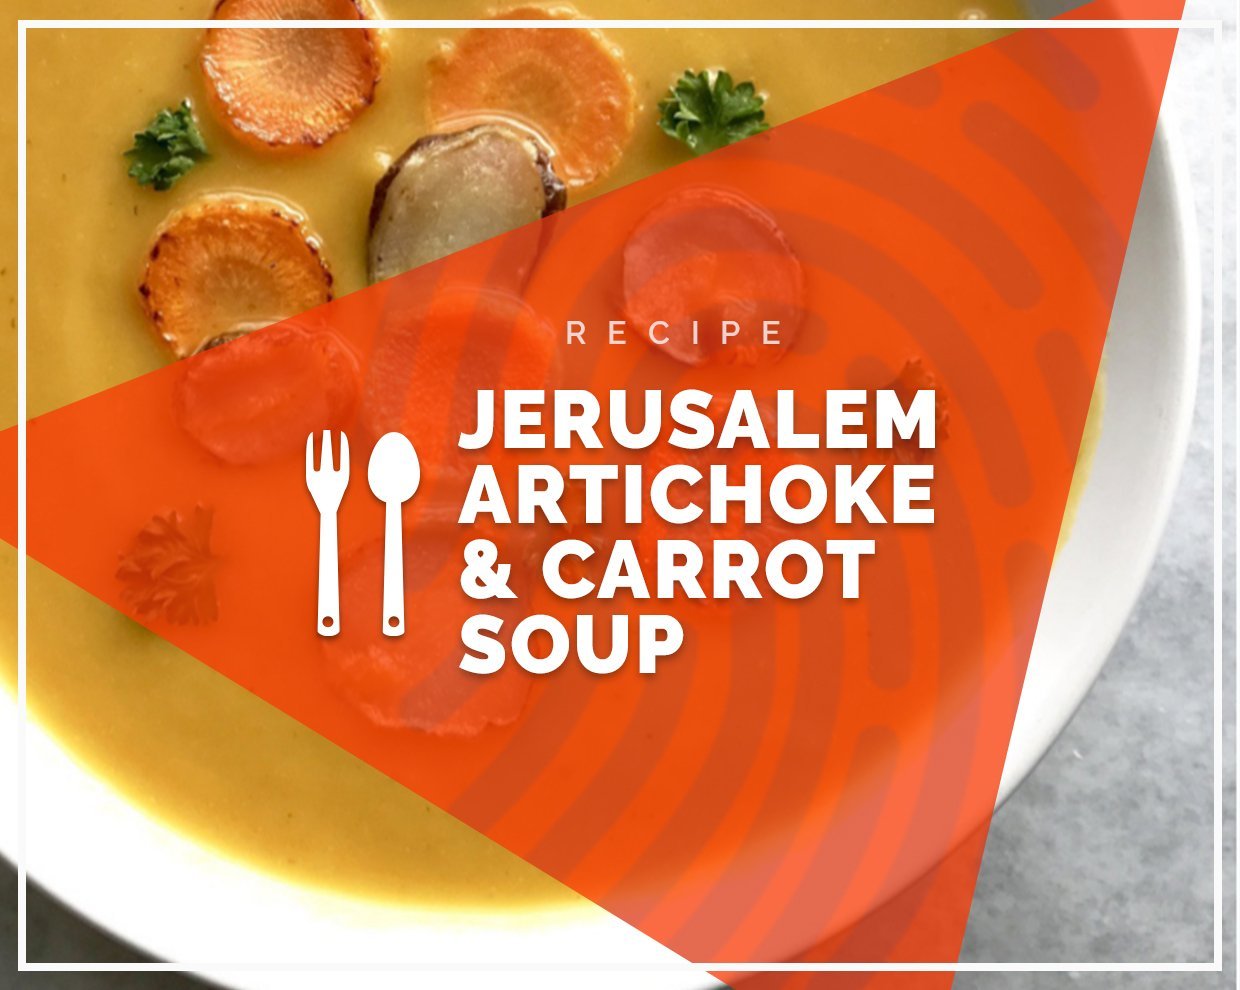 Jerusalem artichoke & carrot soup